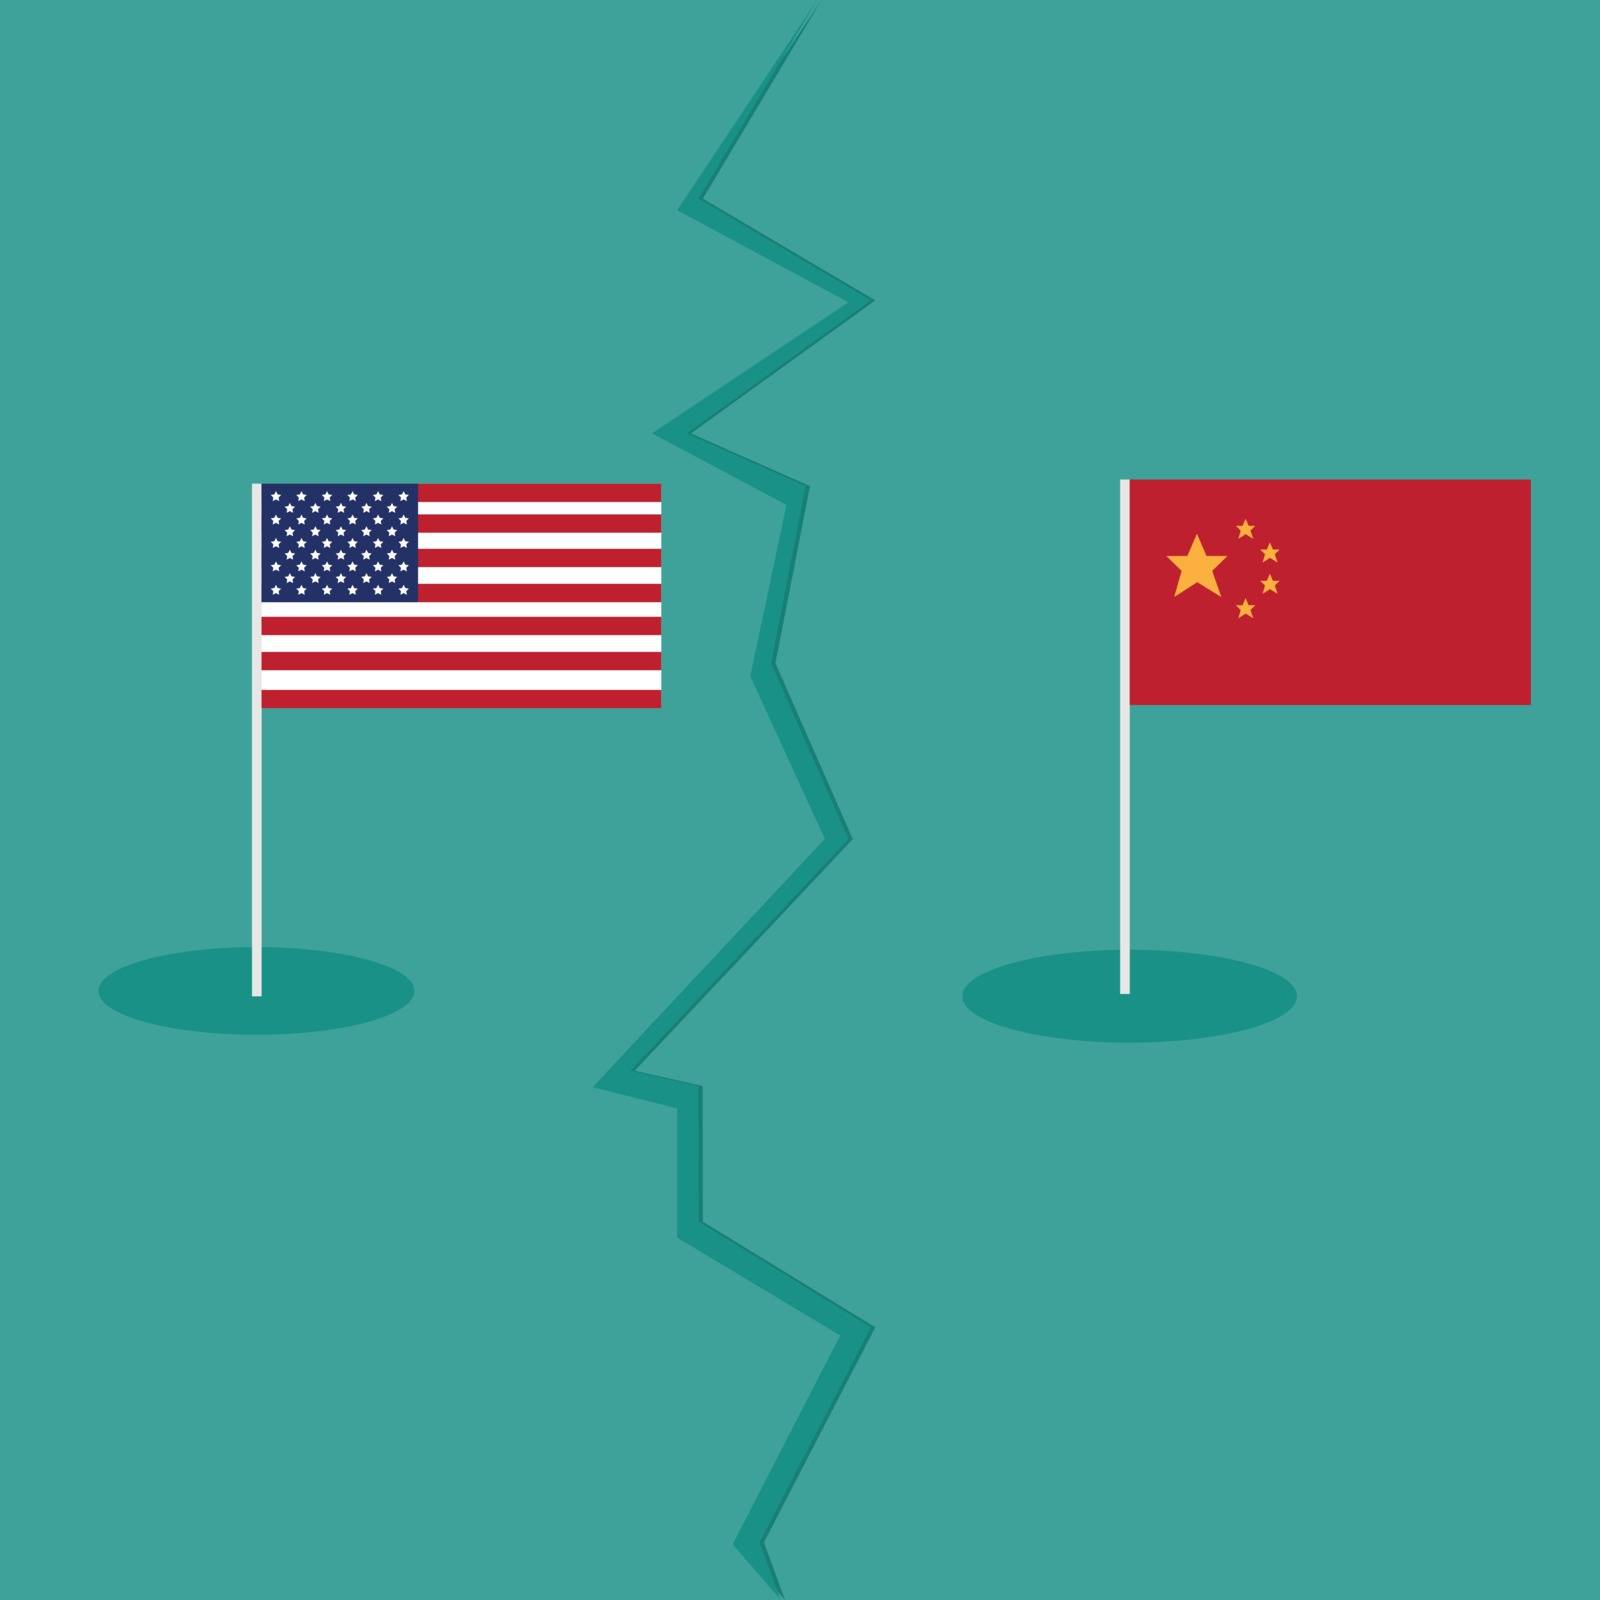 trade war America China tariff business global exchange international concept